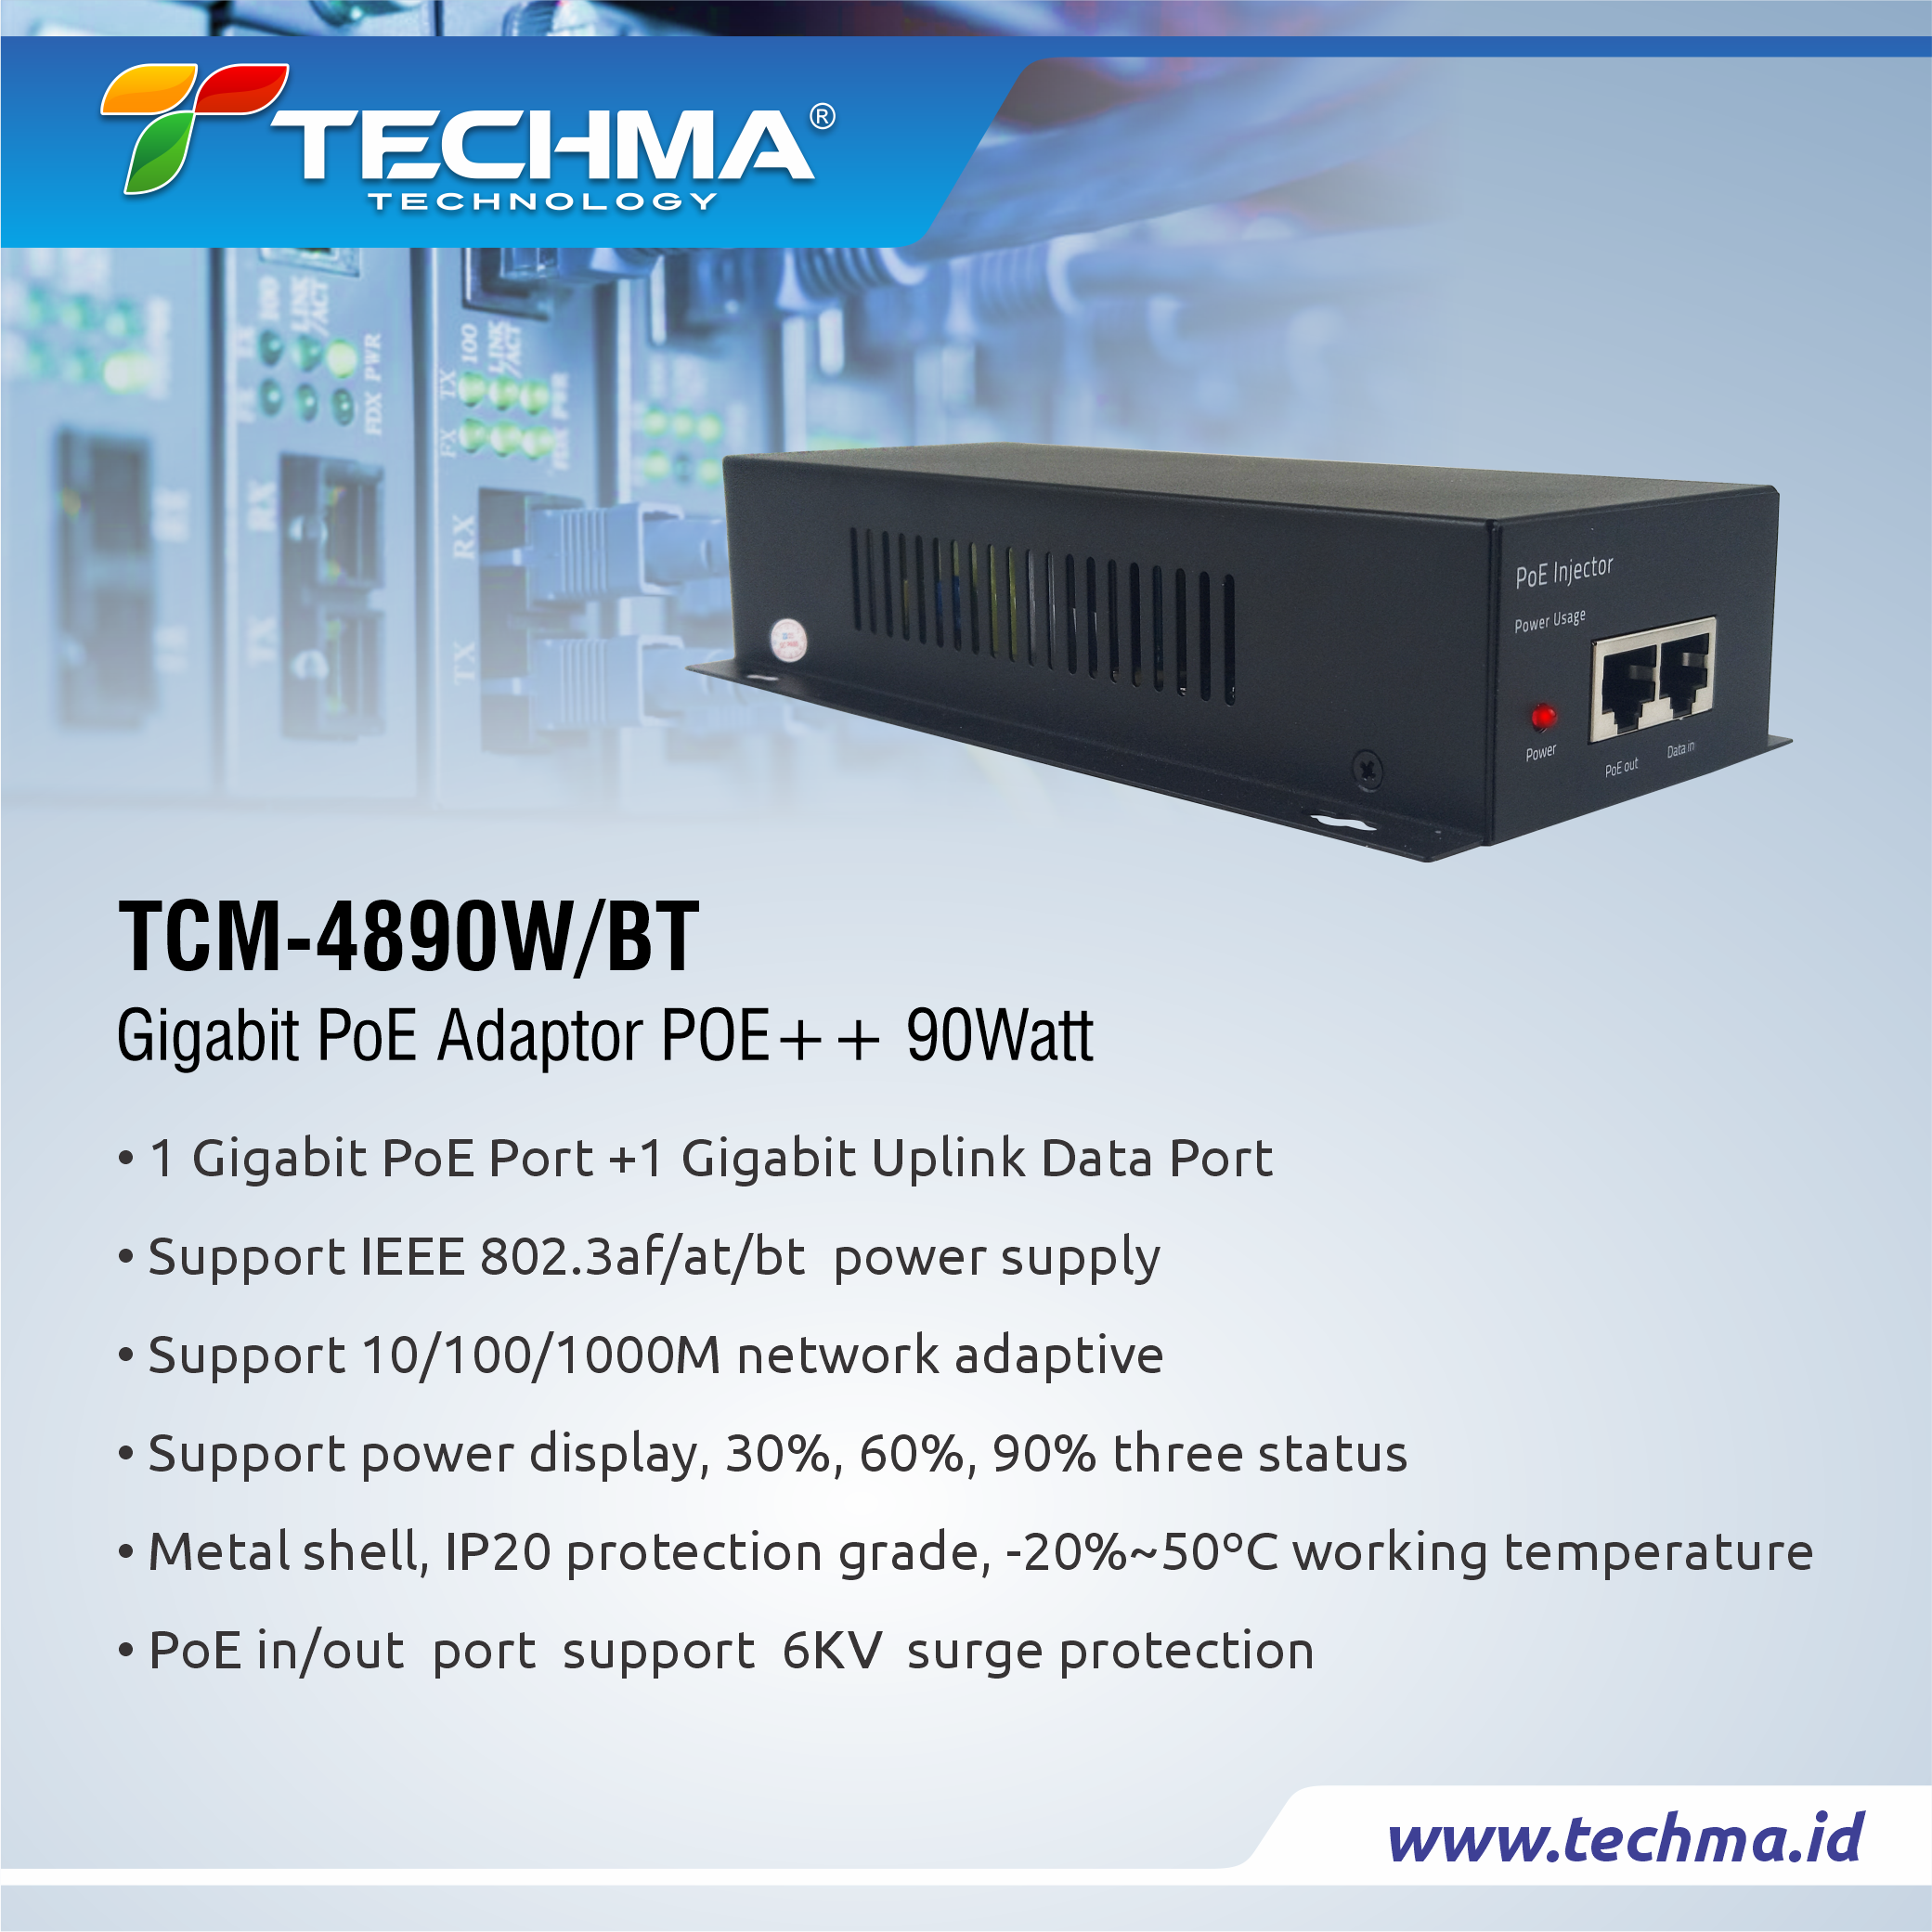 TCM-4890WBT web 2